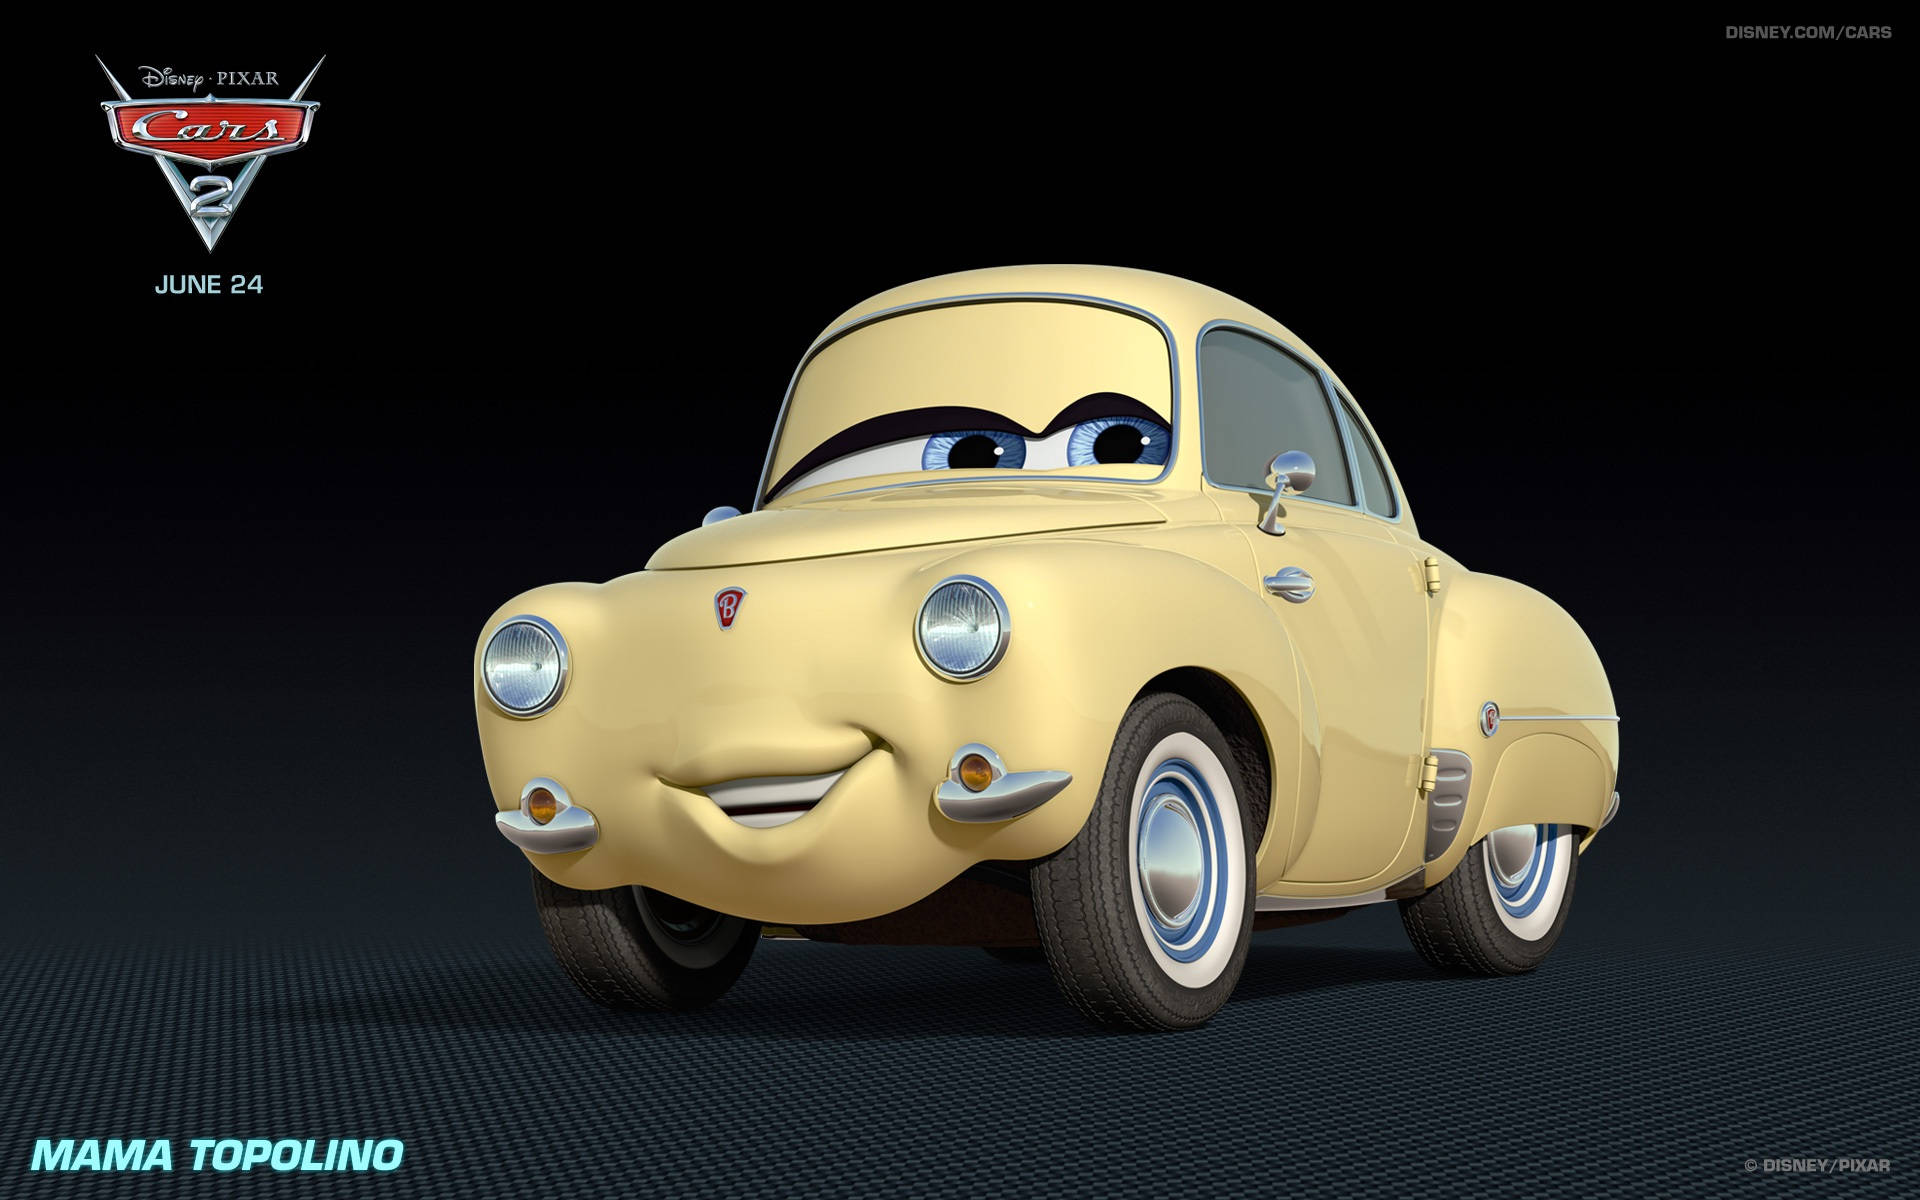 Disney Pixar Mama Topolino Cars 2 Picture